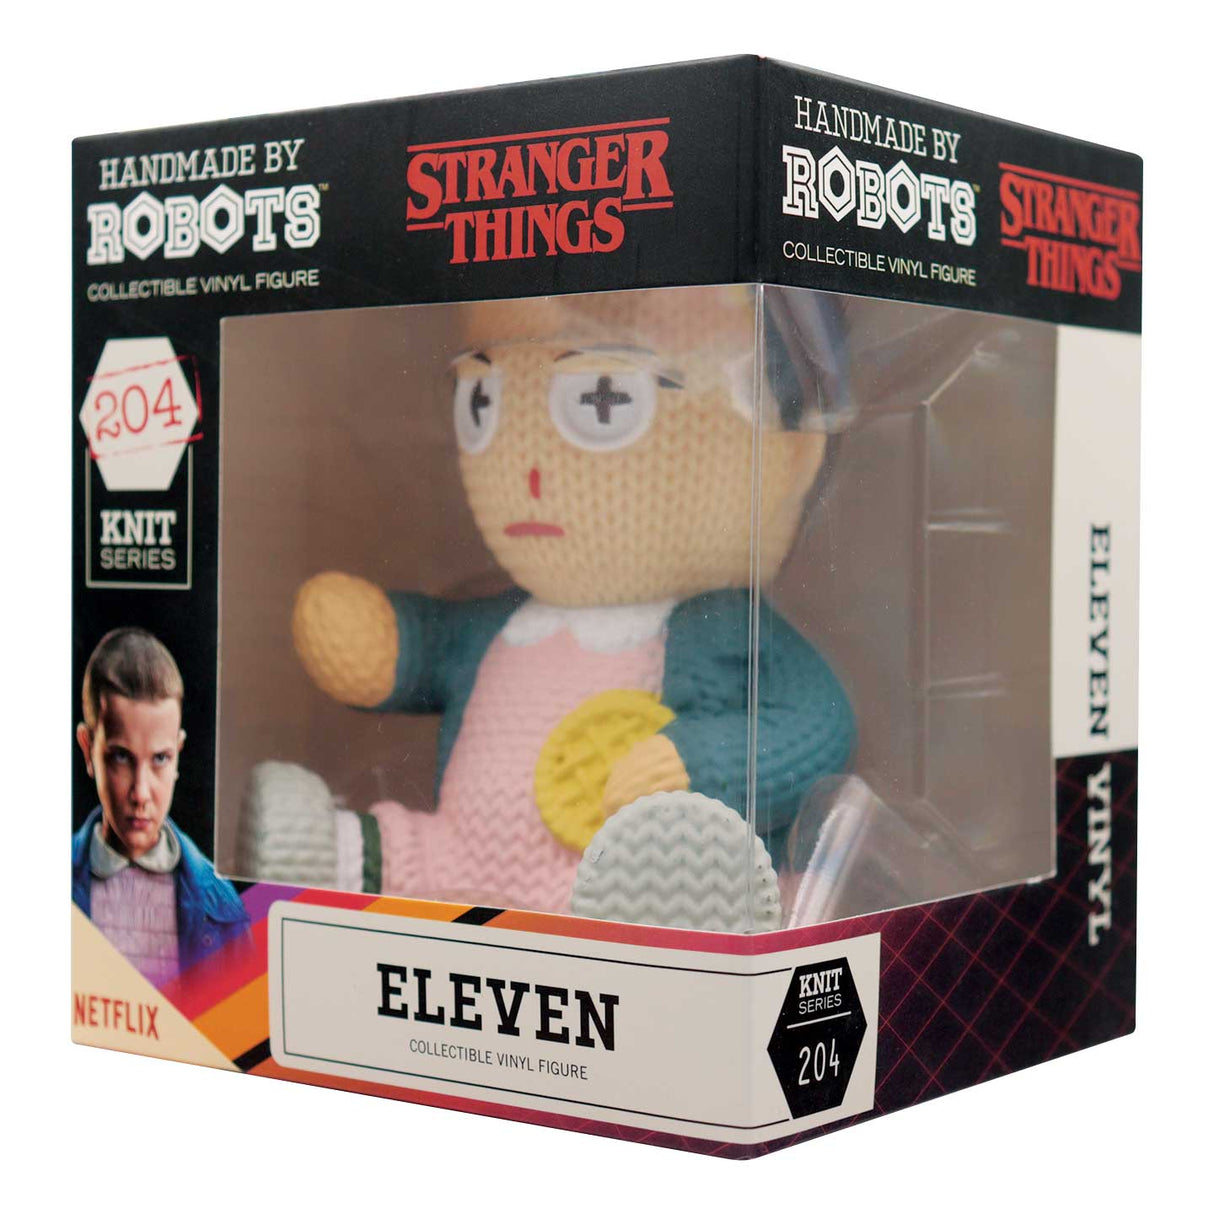 Eleven | Stranger Things | Handmade by Robots | Vinyl Figure | Knit Series #204